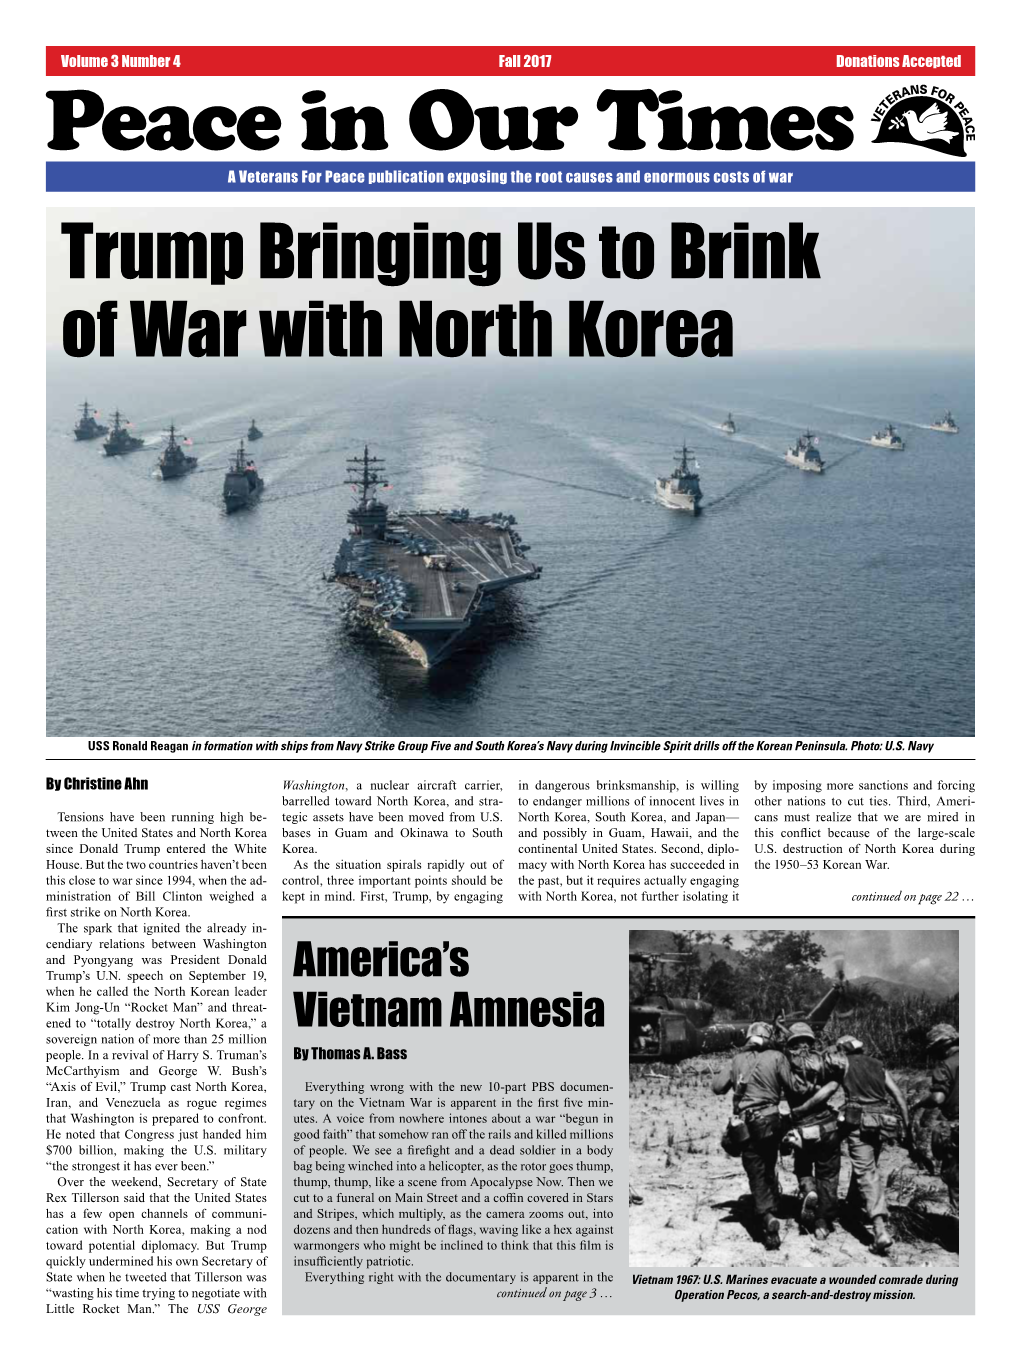 Trump Bringing Us to Brink of War with North Korea